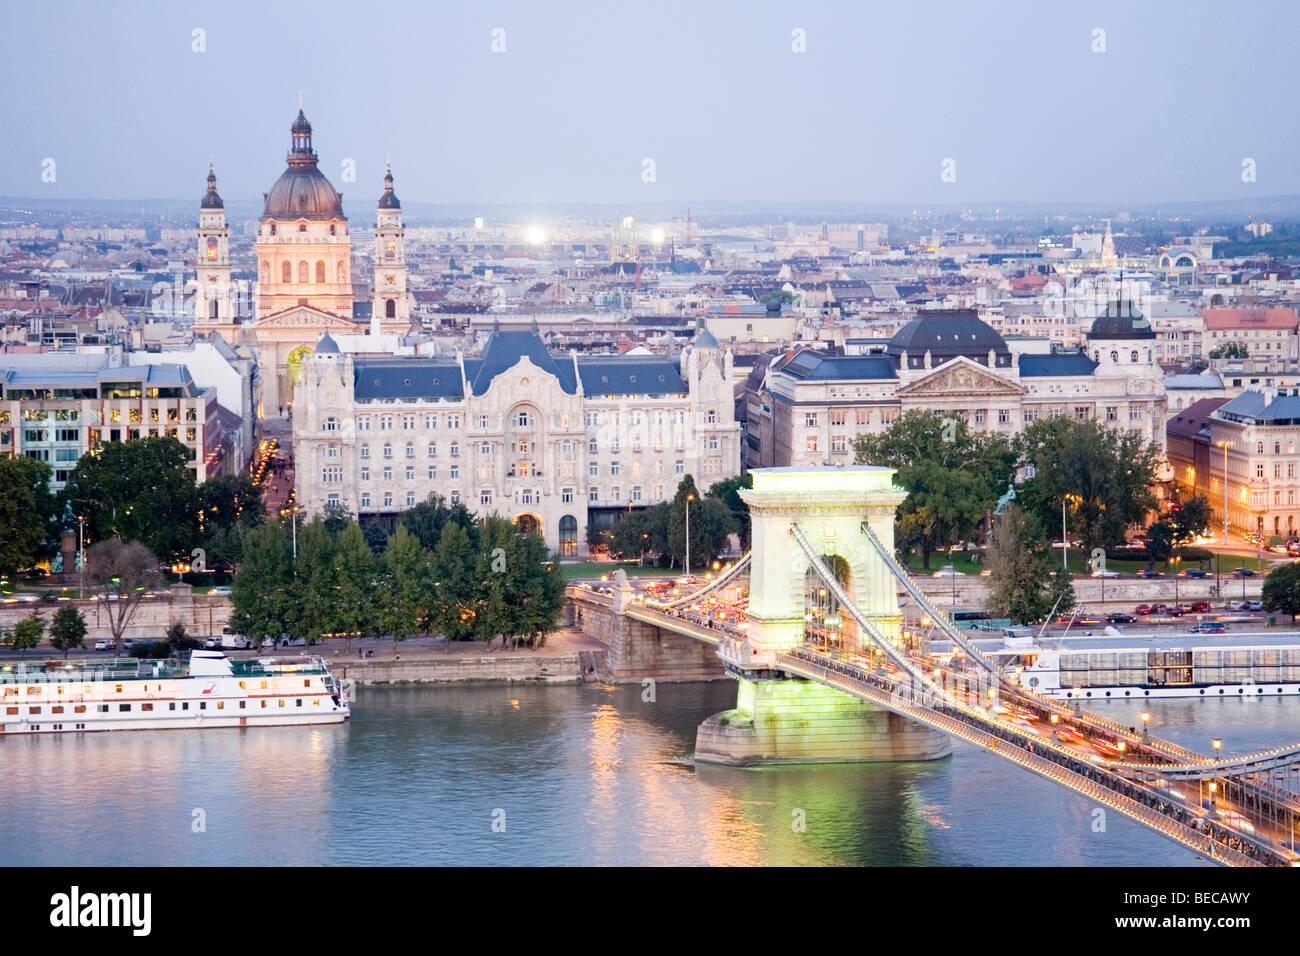 Chain Bridge and St. Stephen's Basilica, dusk, Budapest, Hungary, Eastern Europe Stock Photo